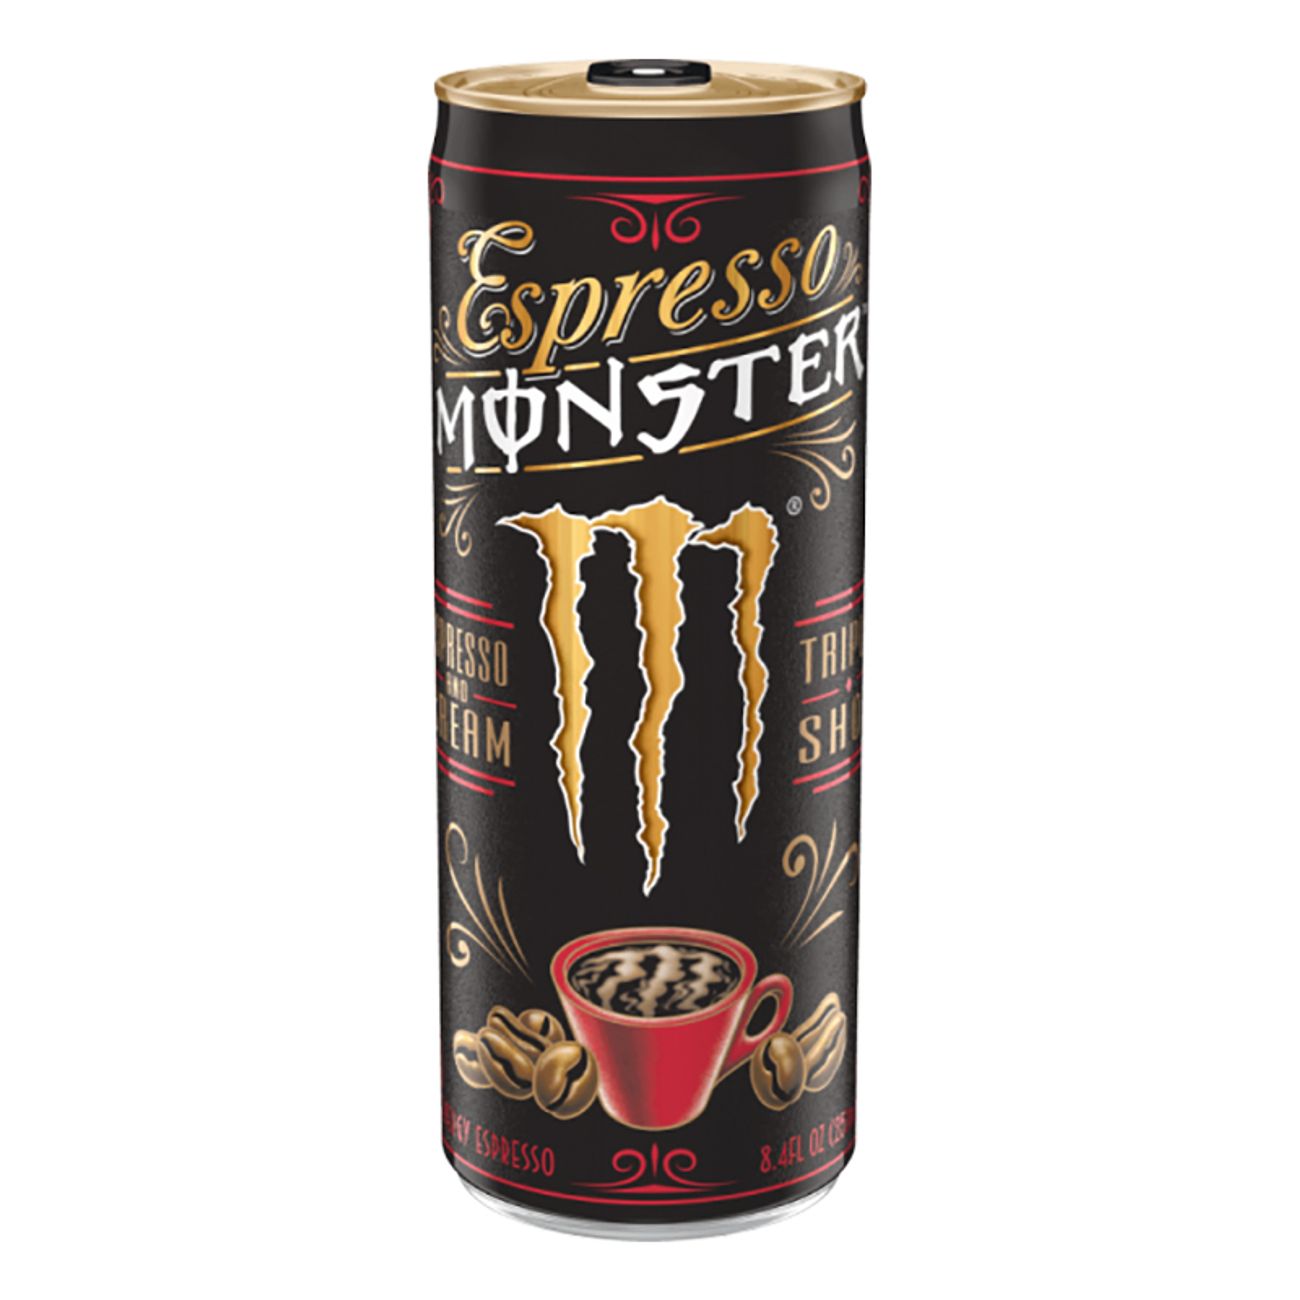 monster-espresso-milk-2